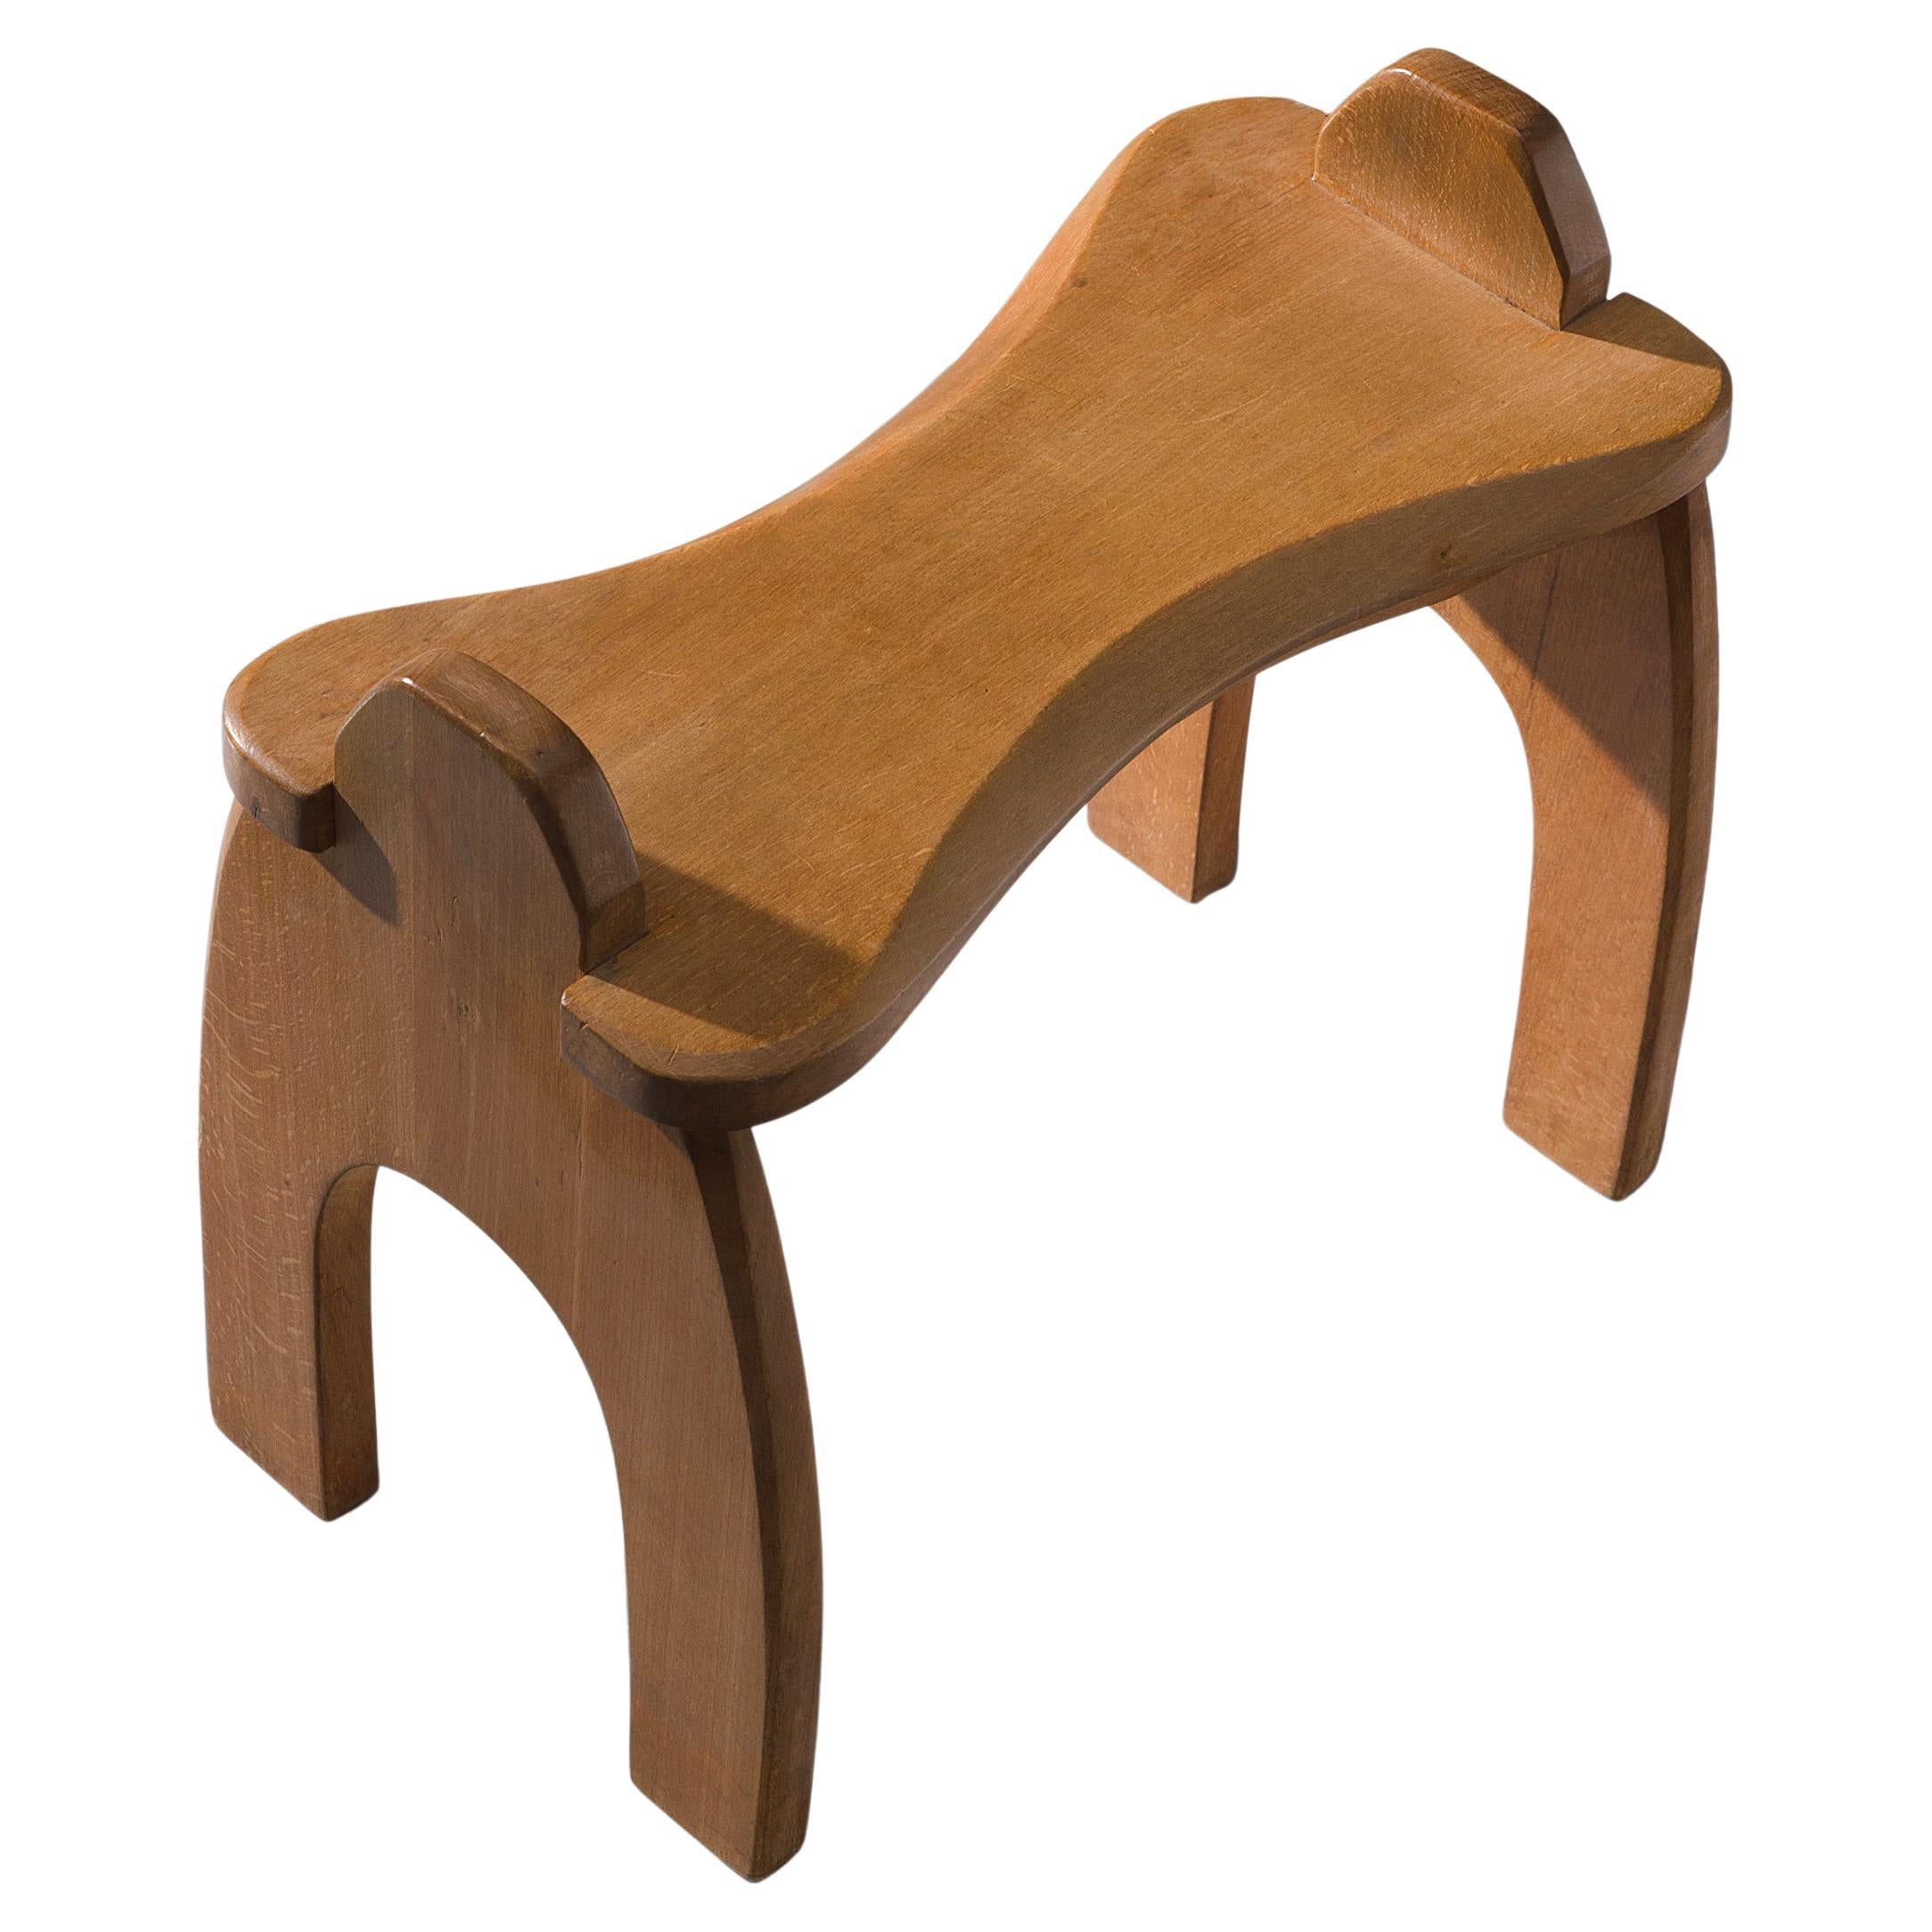 Sculptural Wooden Stool in Solid Oak